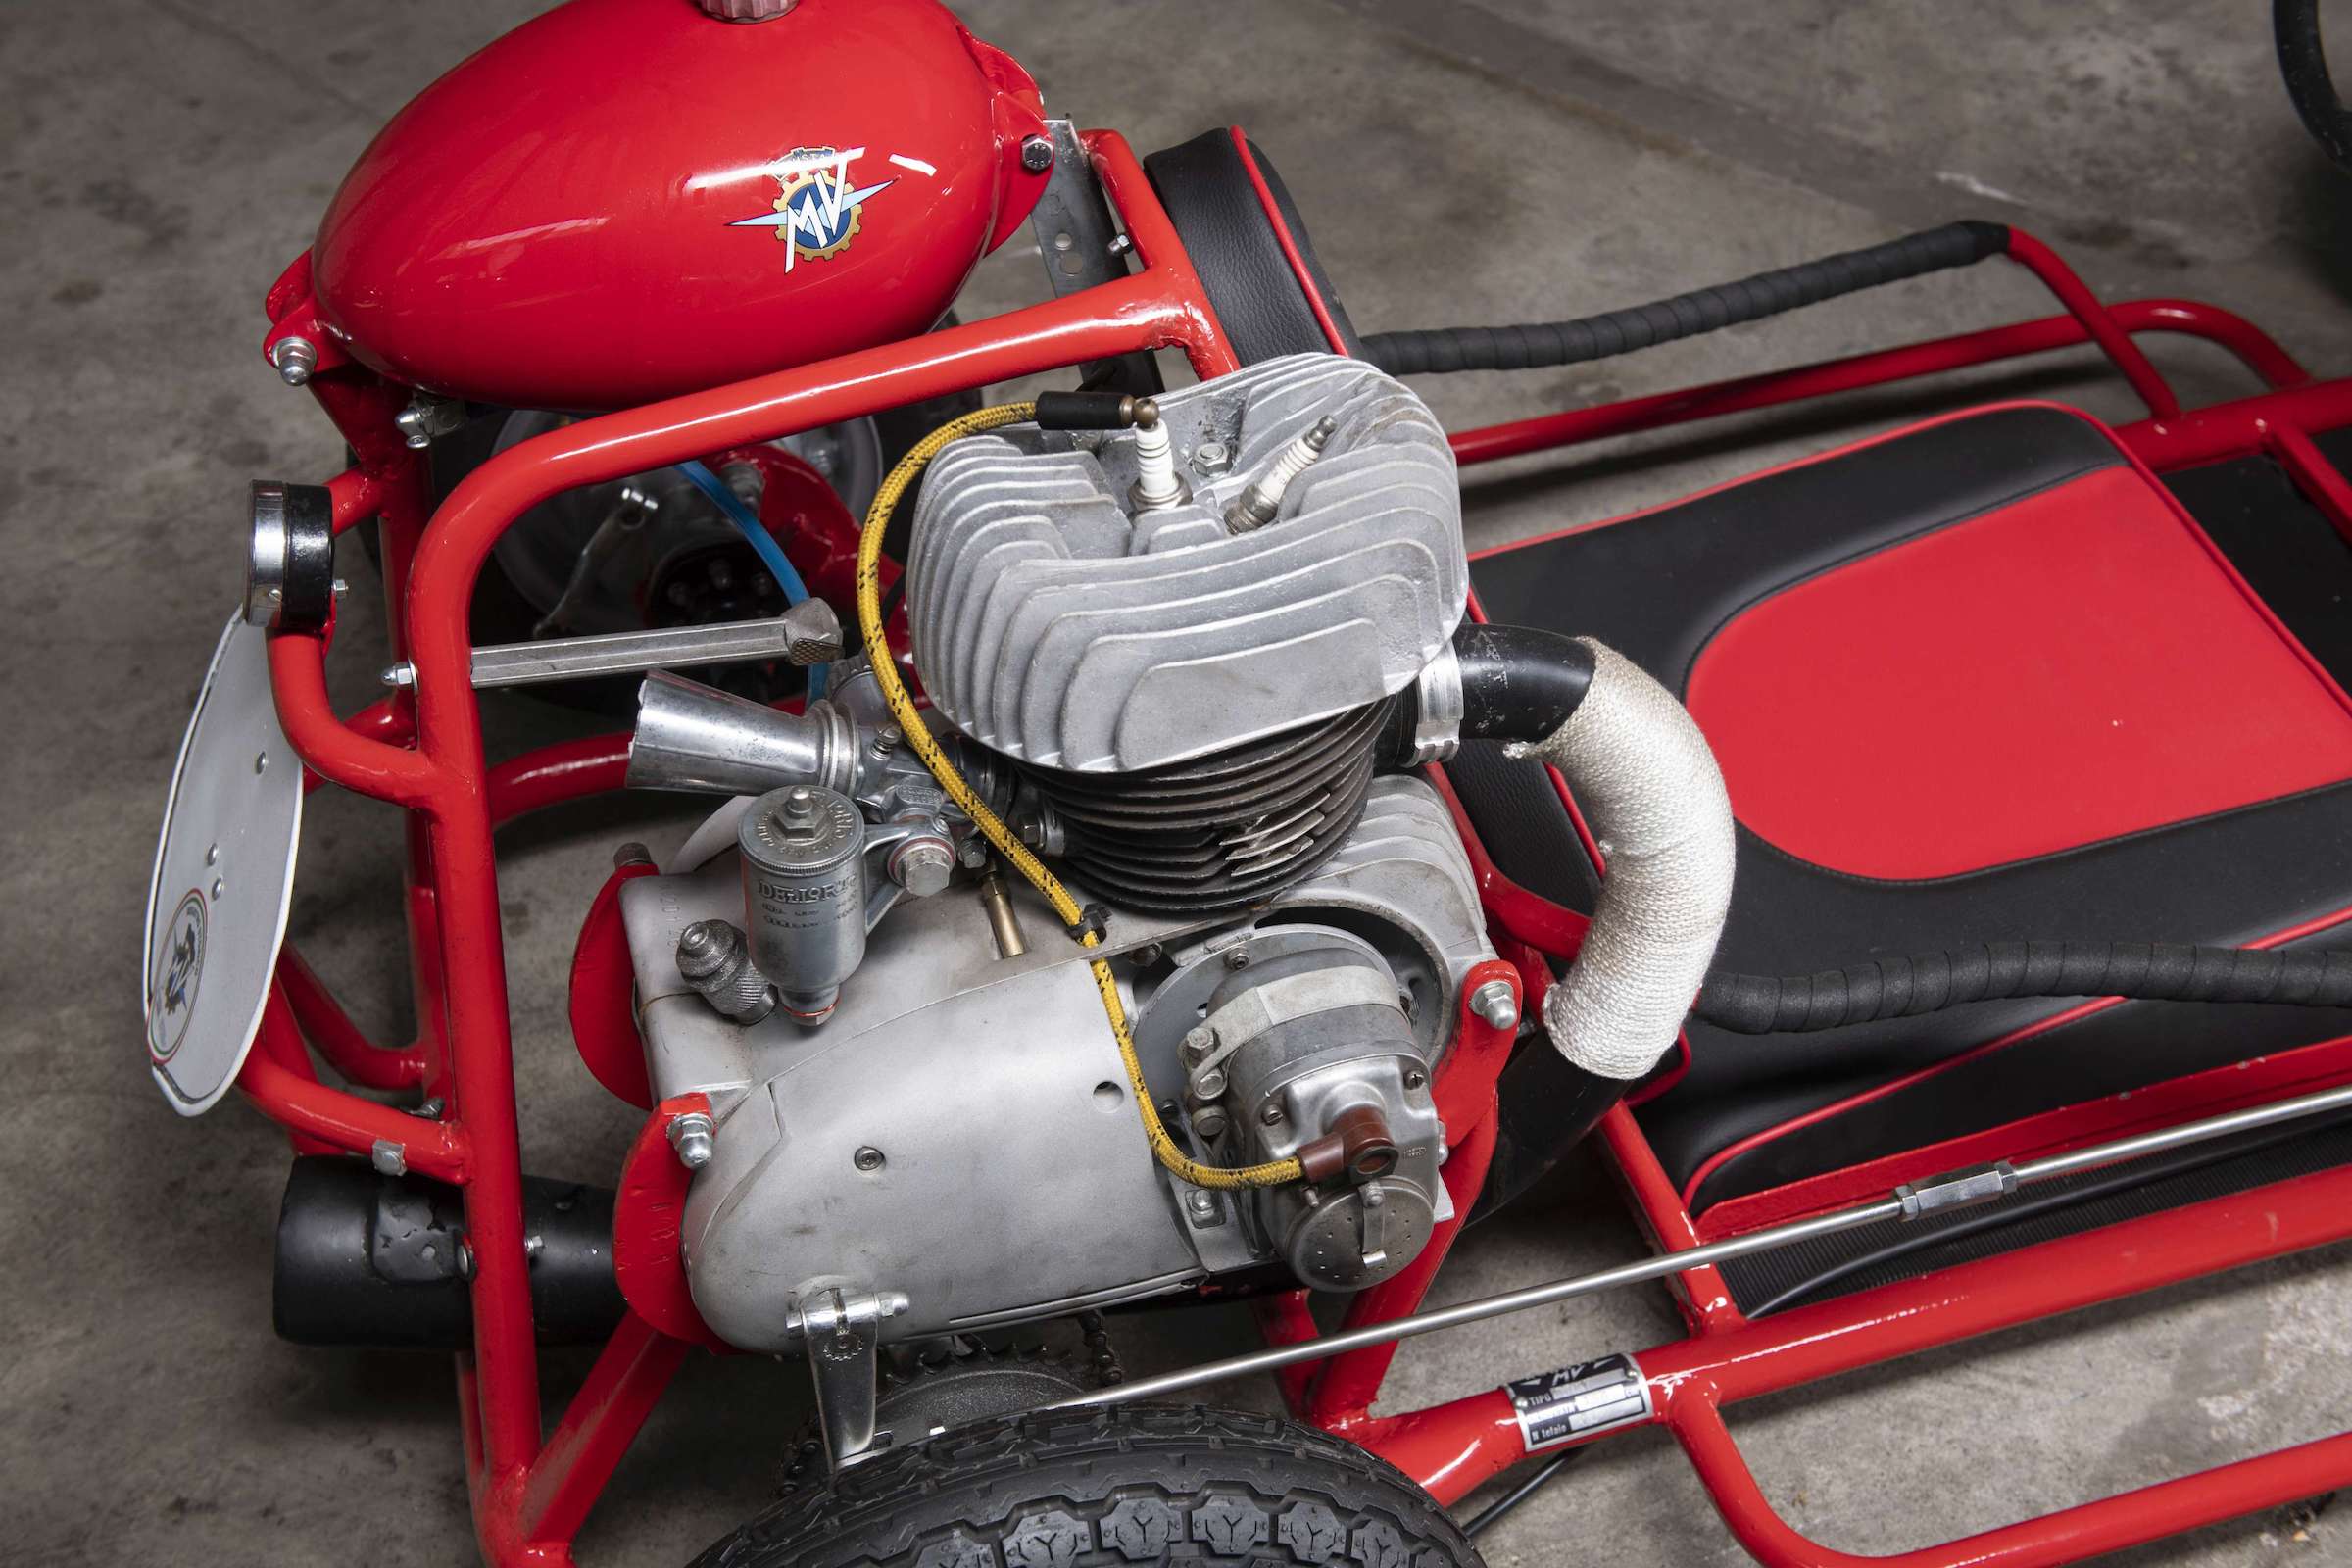 An MV Agusta-Powered Tony Go Kart - 150cc Two-Stroke 4-Speed